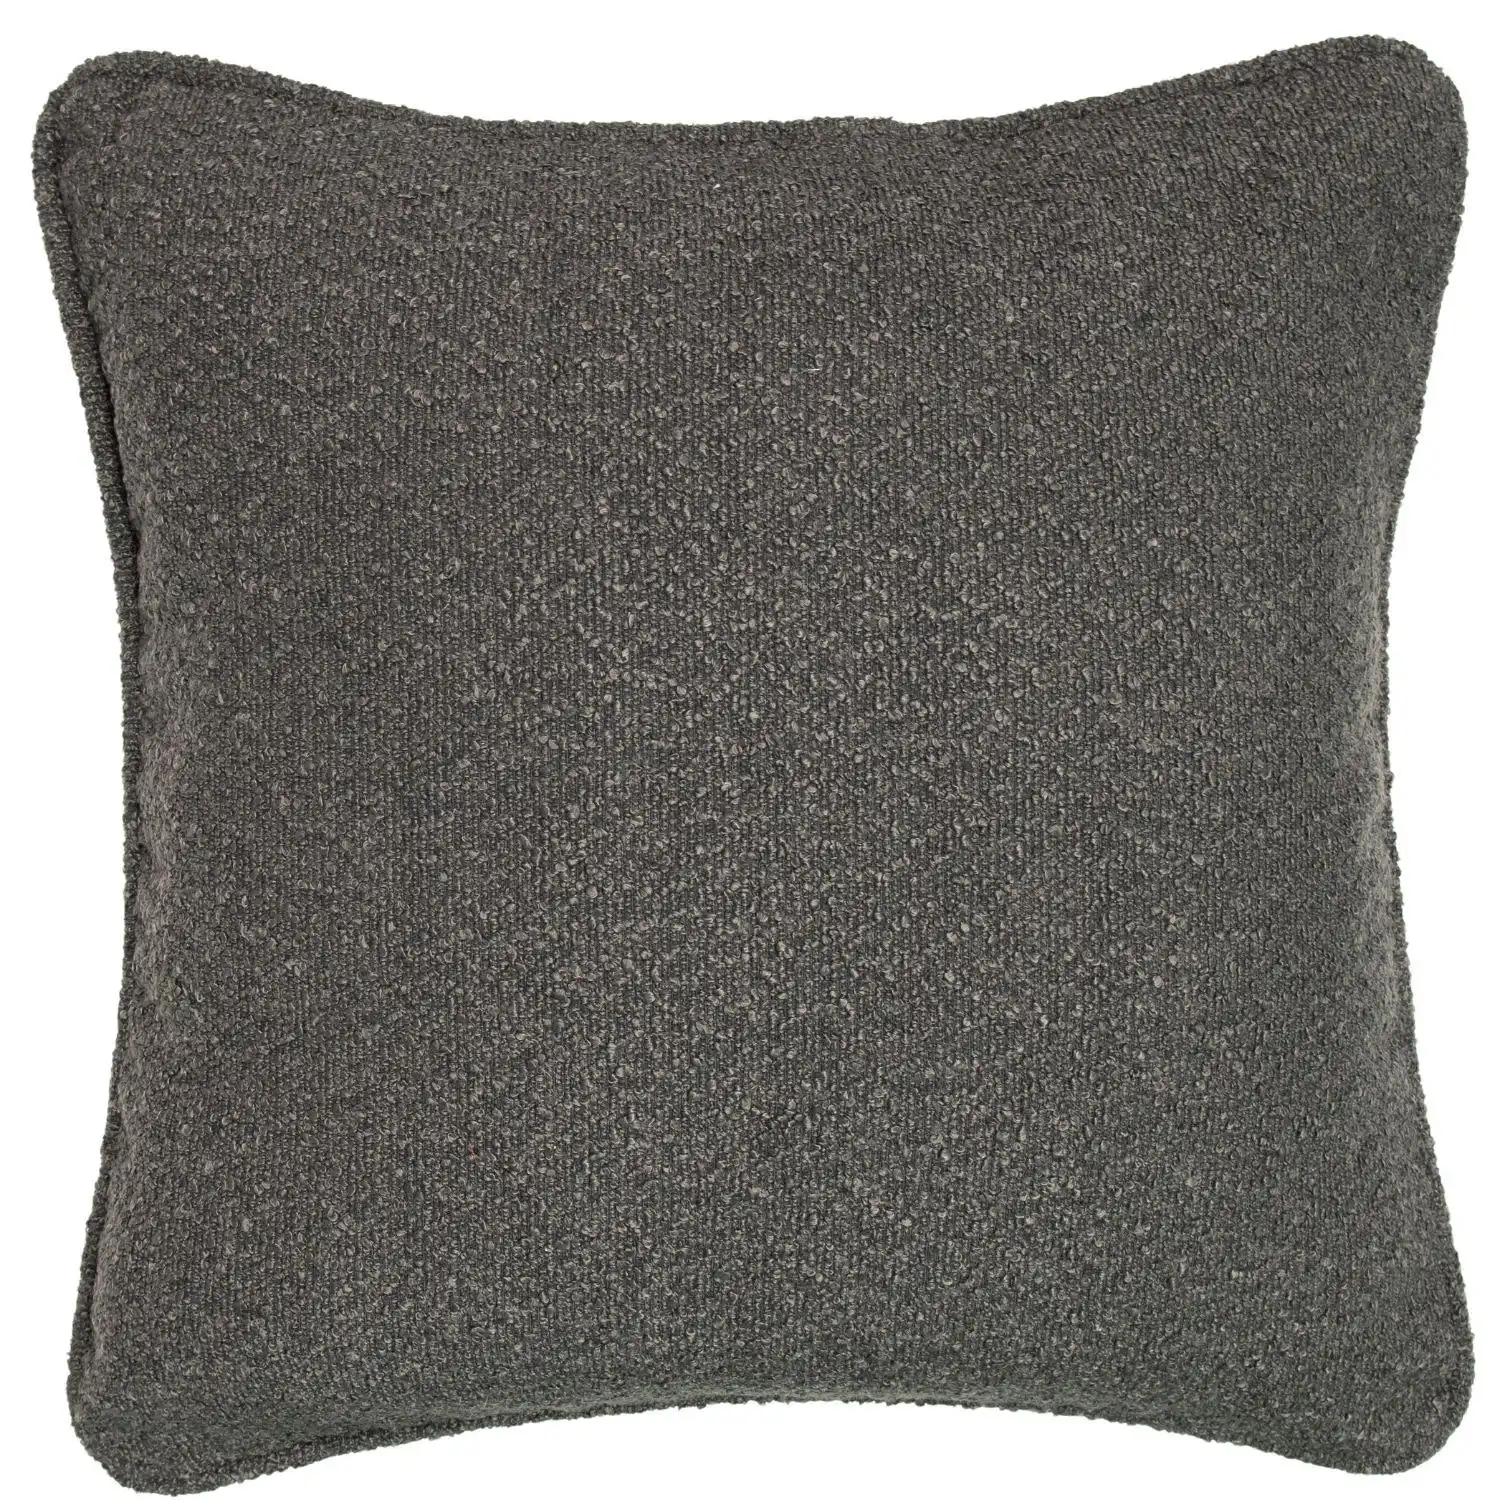 Boucle European Cushion - Charcoal